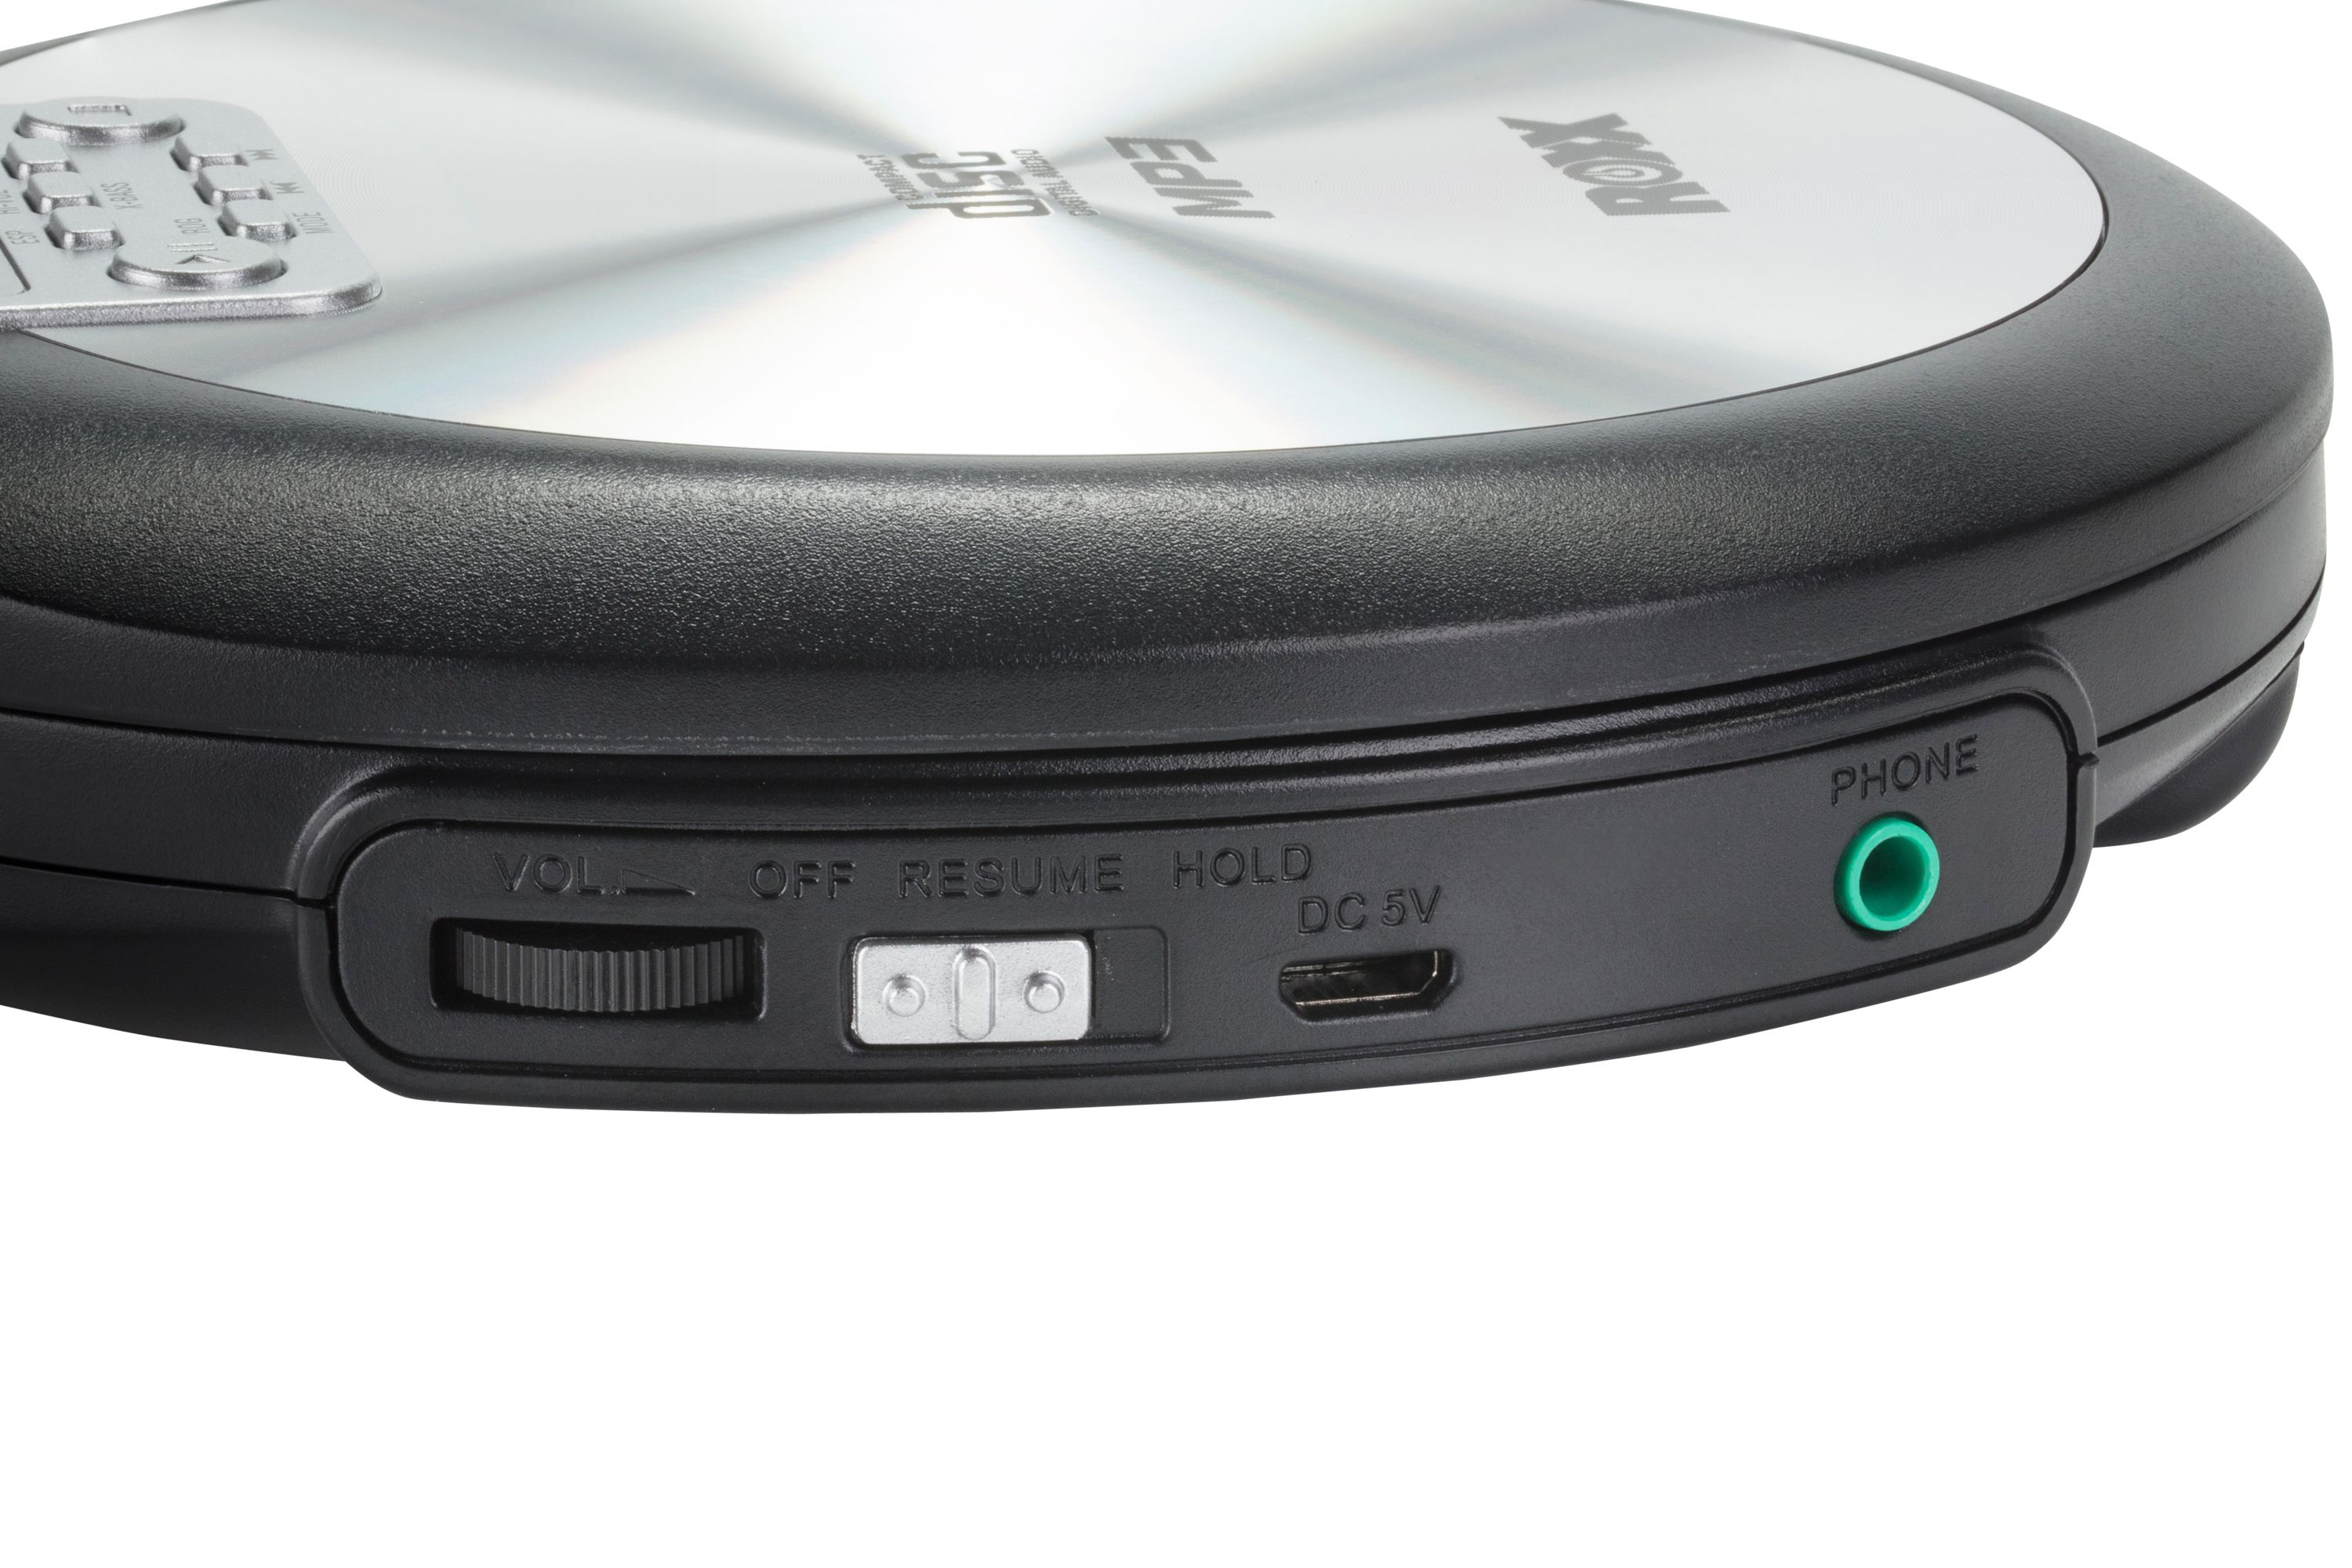 CD-Player Tragbarer 600 PCD silber-schwarz ROXX